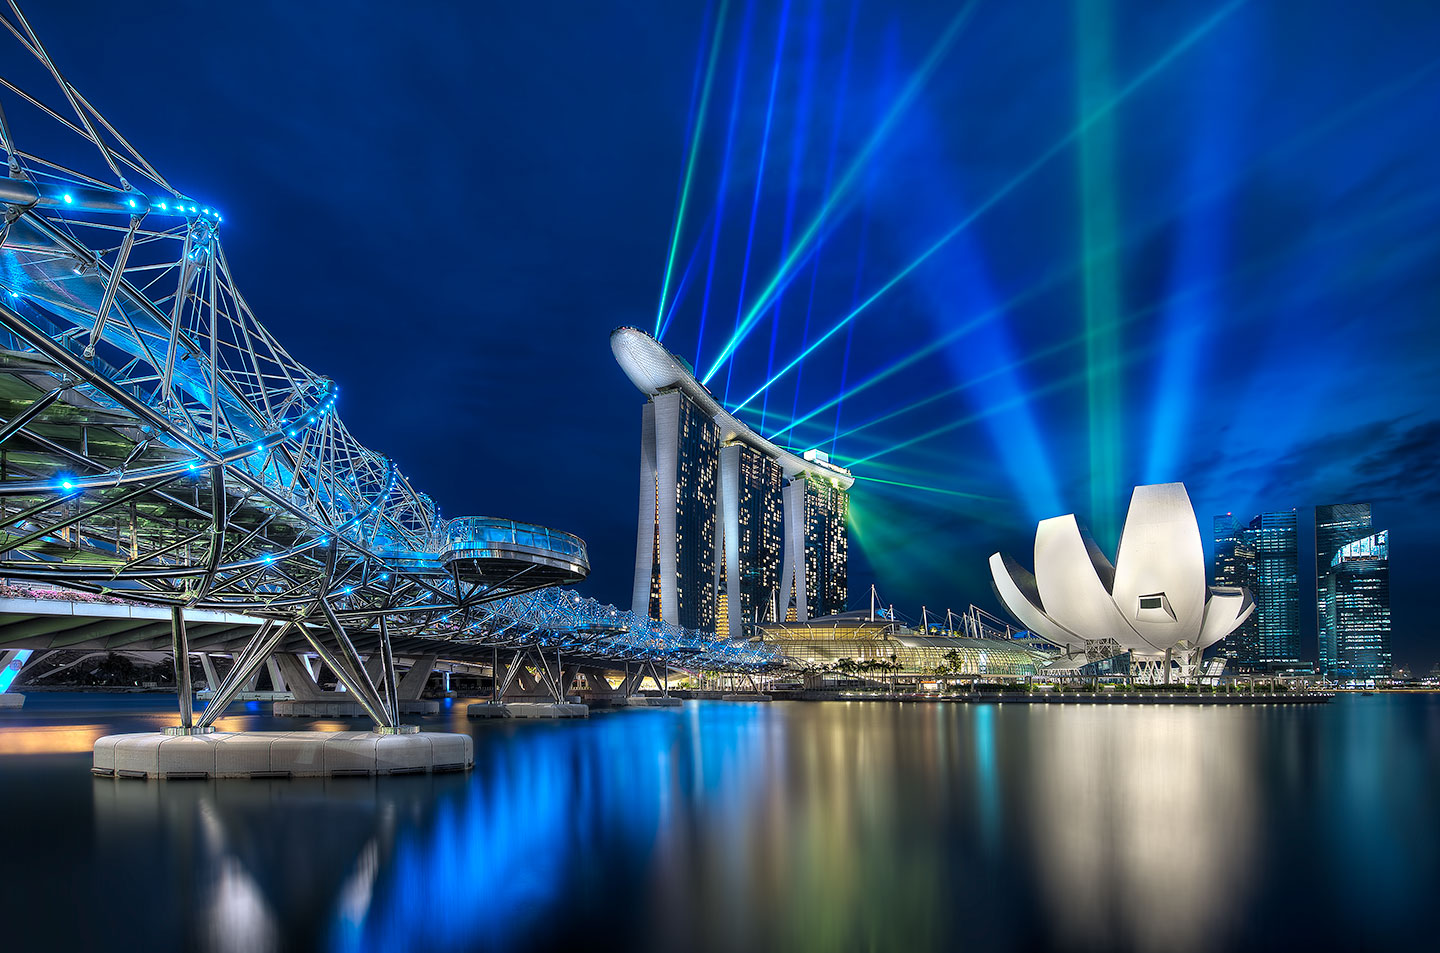 Marina Bay Sands and The Helix Bridge - Singapore